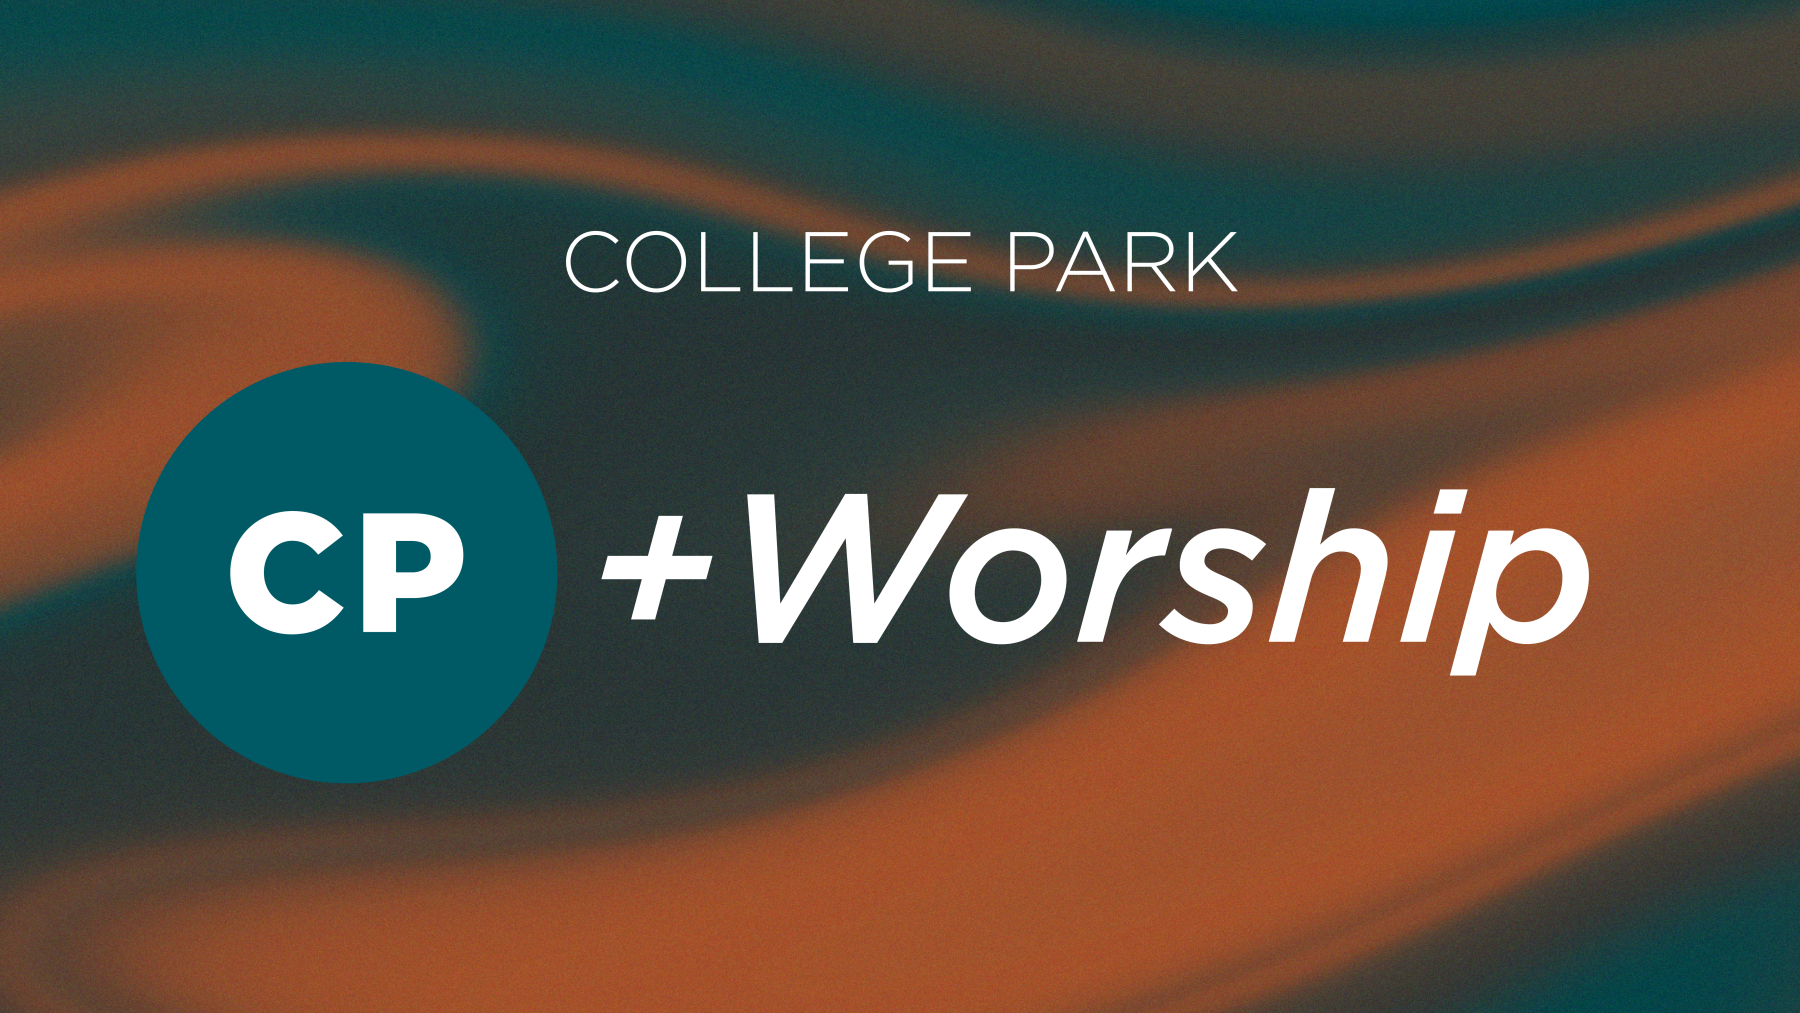 College Park +Worship